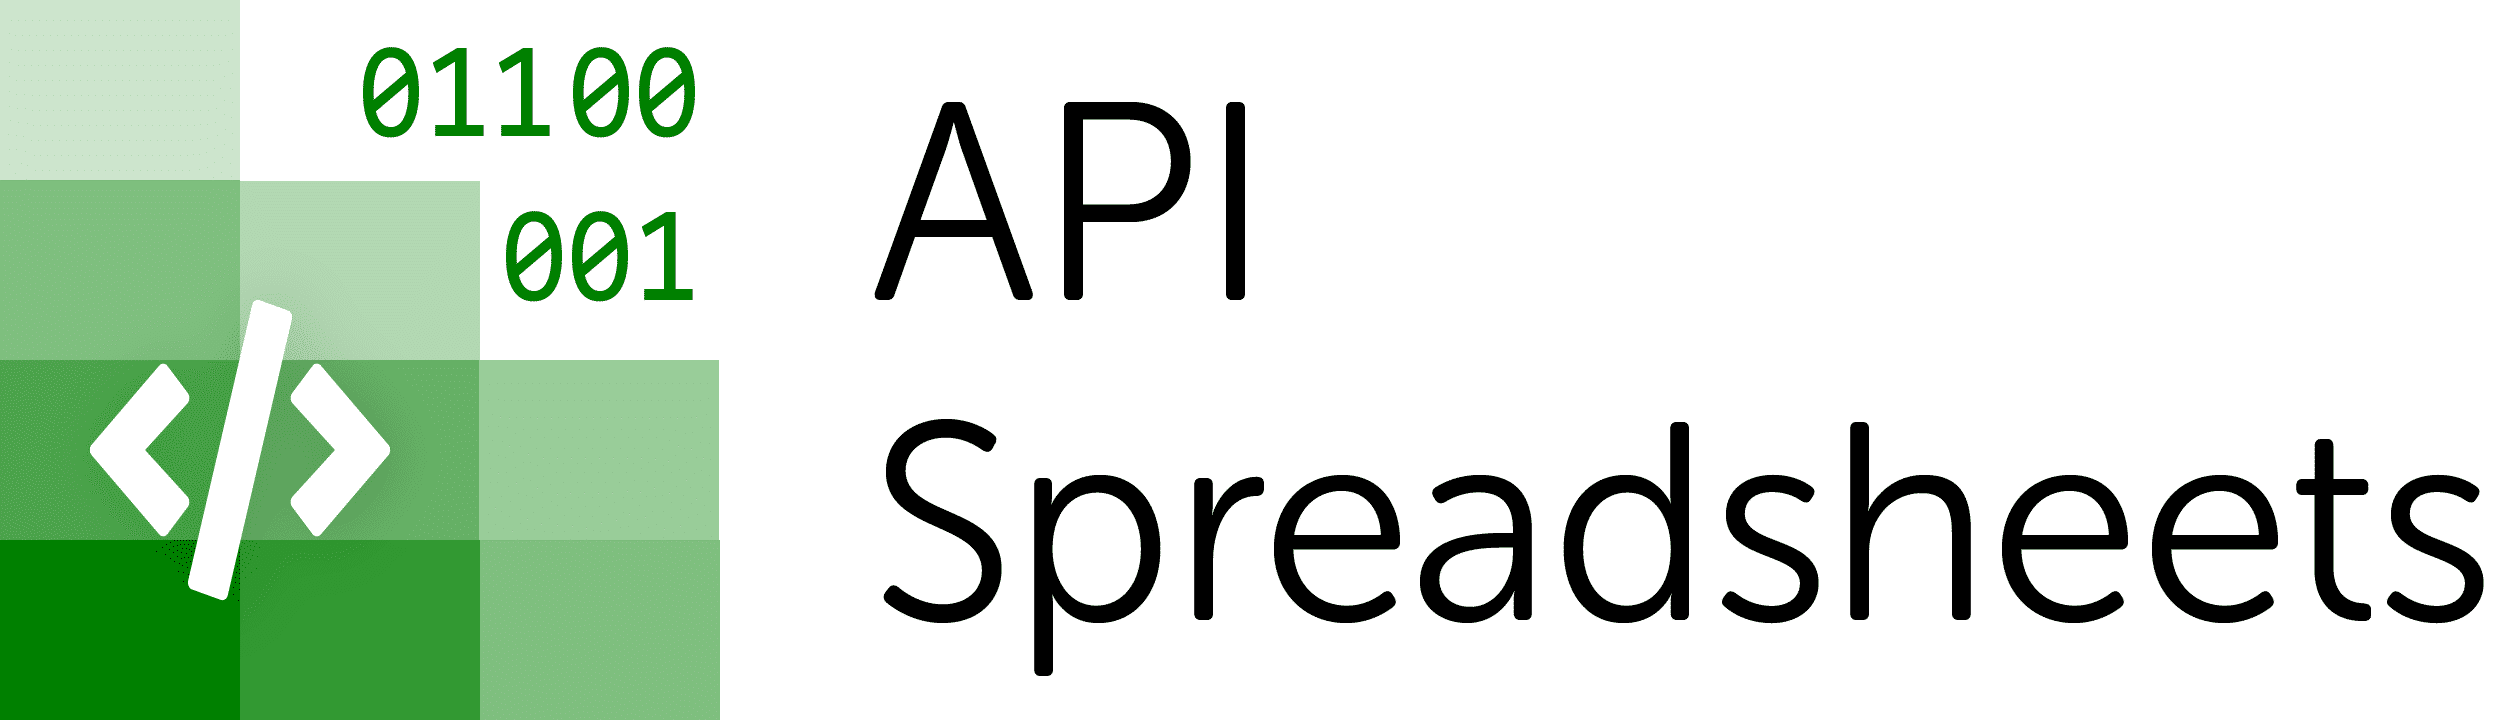 API Spreadsheets - iPaaS Software